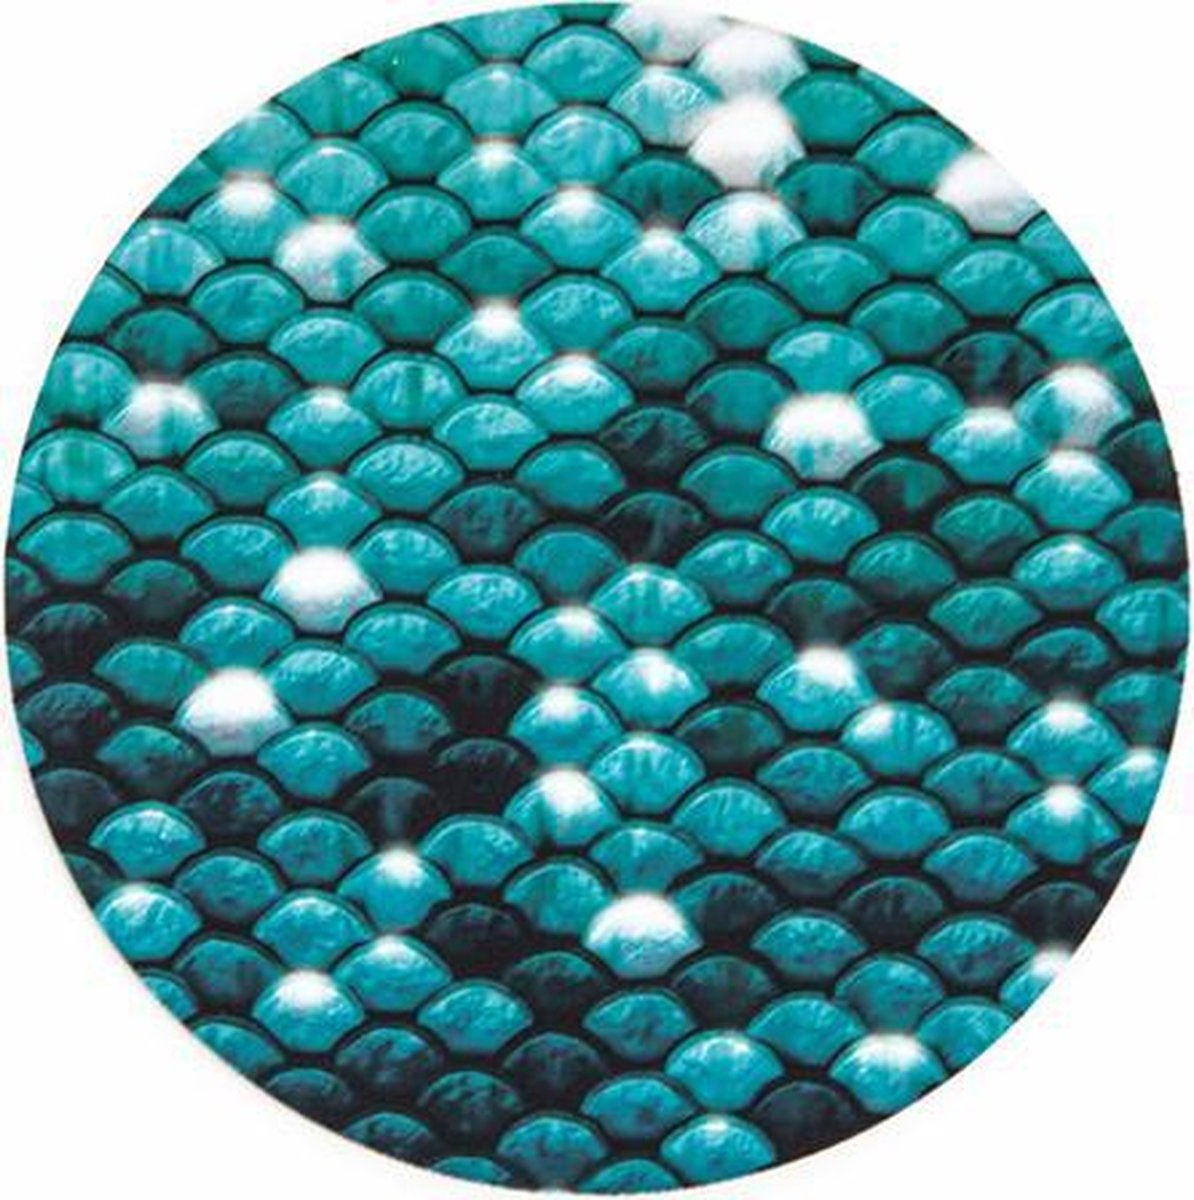 Computer - muismat turquoise - rond - rubber - buigbaar - anti-slip - mousepad